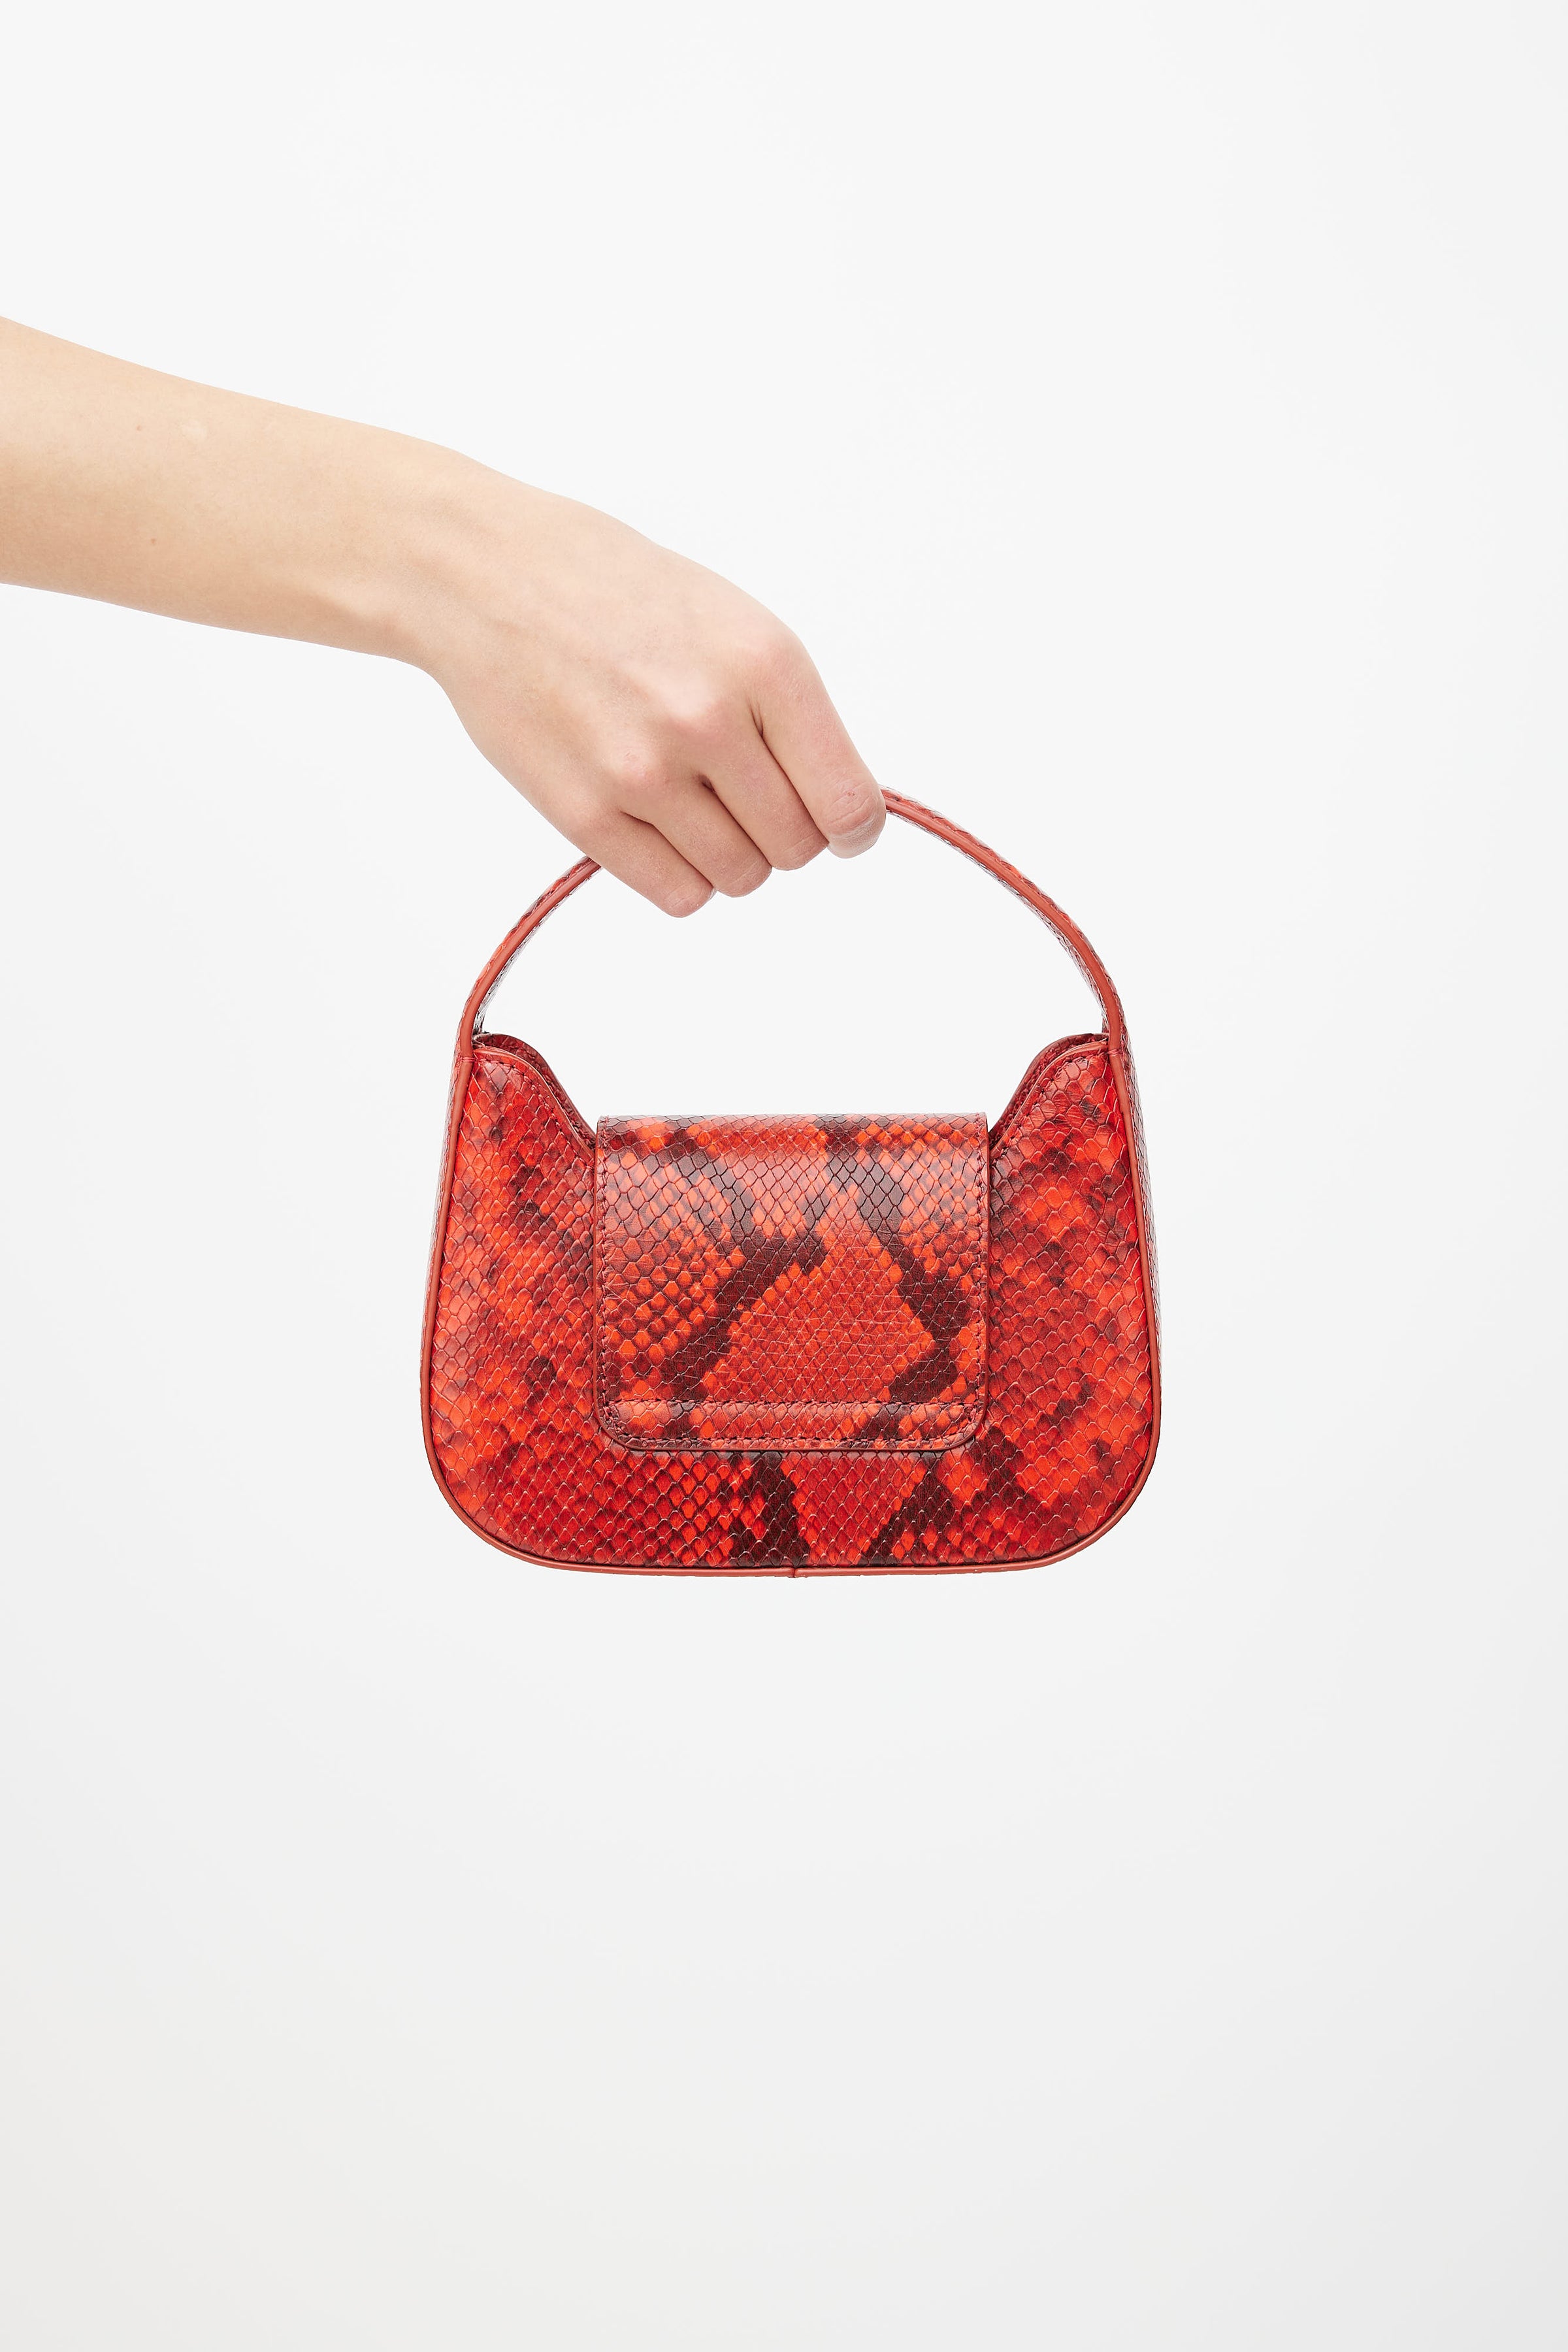 Simon Miller // Red Textured Leather Mini Retro Bag – VSP Consignment